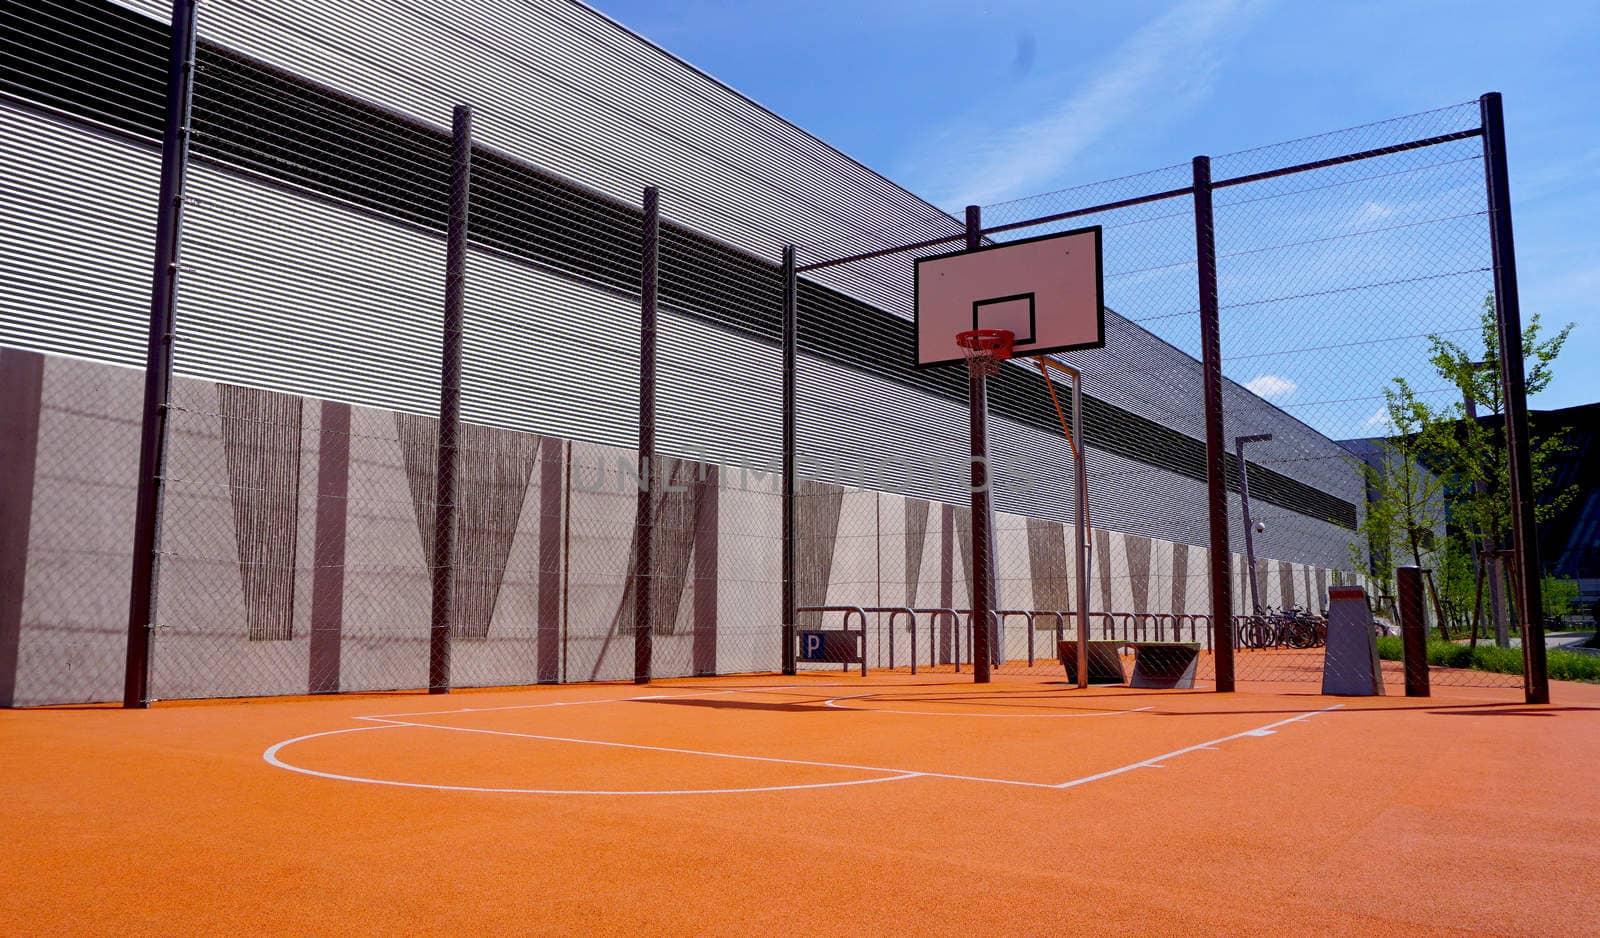 Basketball court outdoor public horizontal